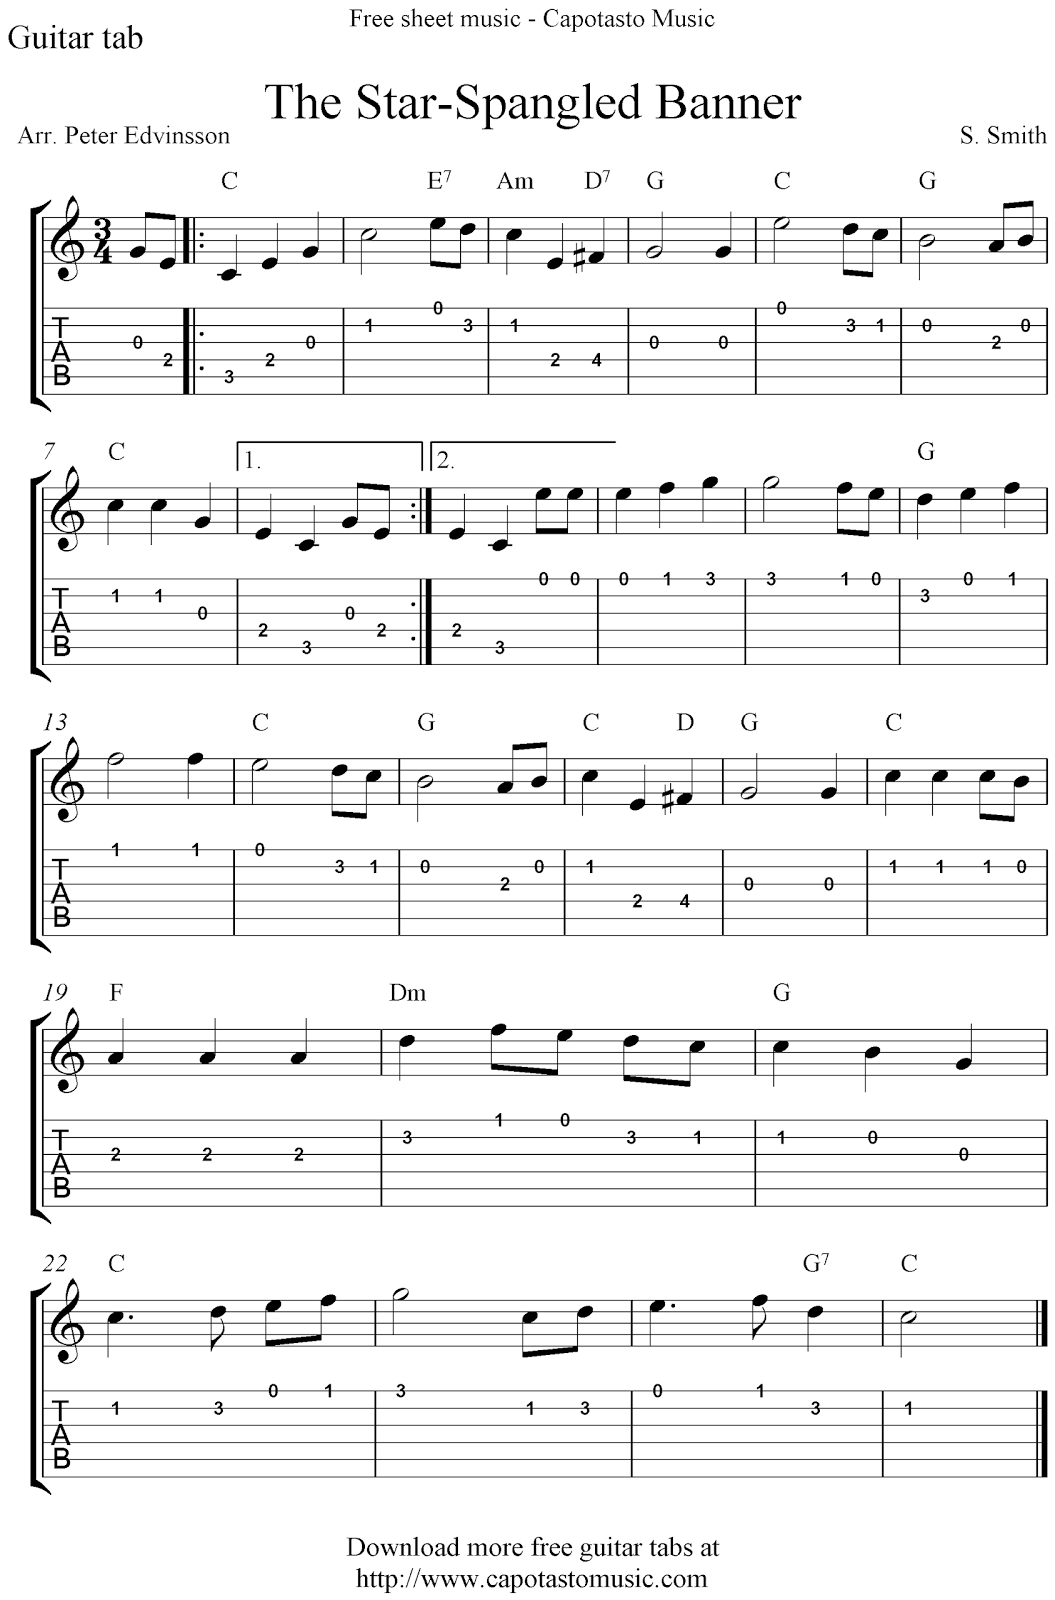 Free Sheet Music Scores: The Star-Spangled Banner, Free Guitar - Free Printable Piano Sheet Music For The Star Spangled Banner